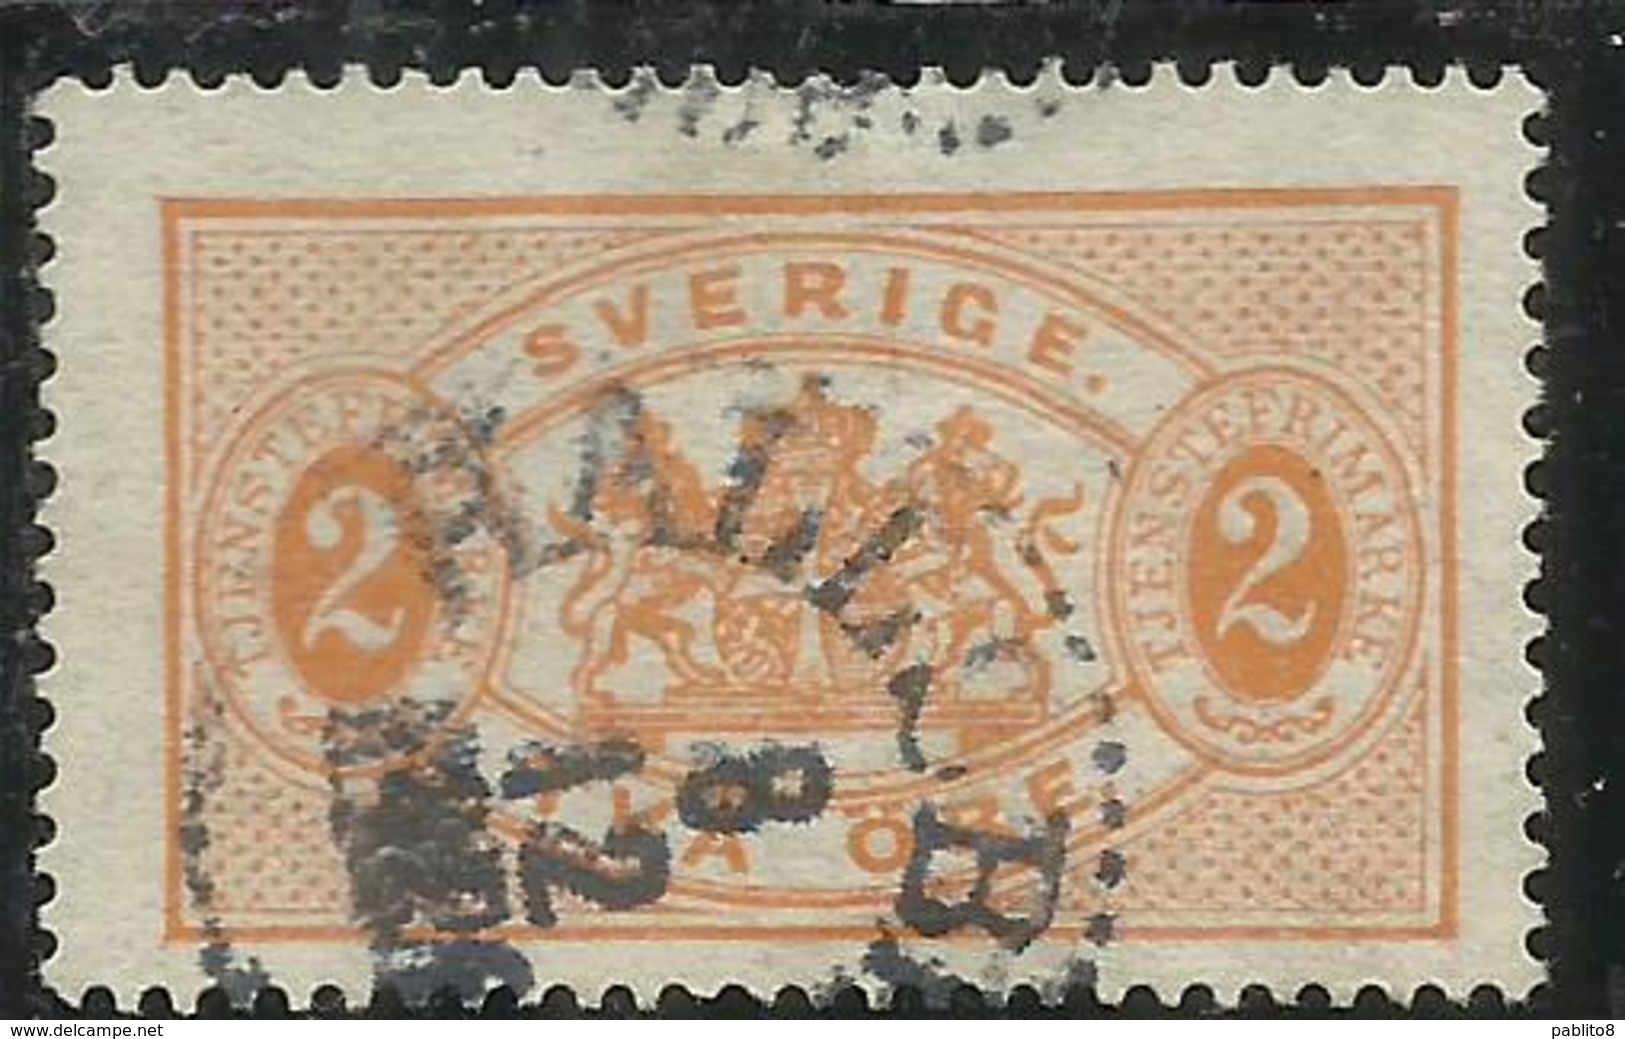 SWEDEN SVERIGE SVEZIA SUEDE 1881 1895 OFFICIAL STAMPS ORE 2o USATO USED OBLITERE' - Revenue Stamps